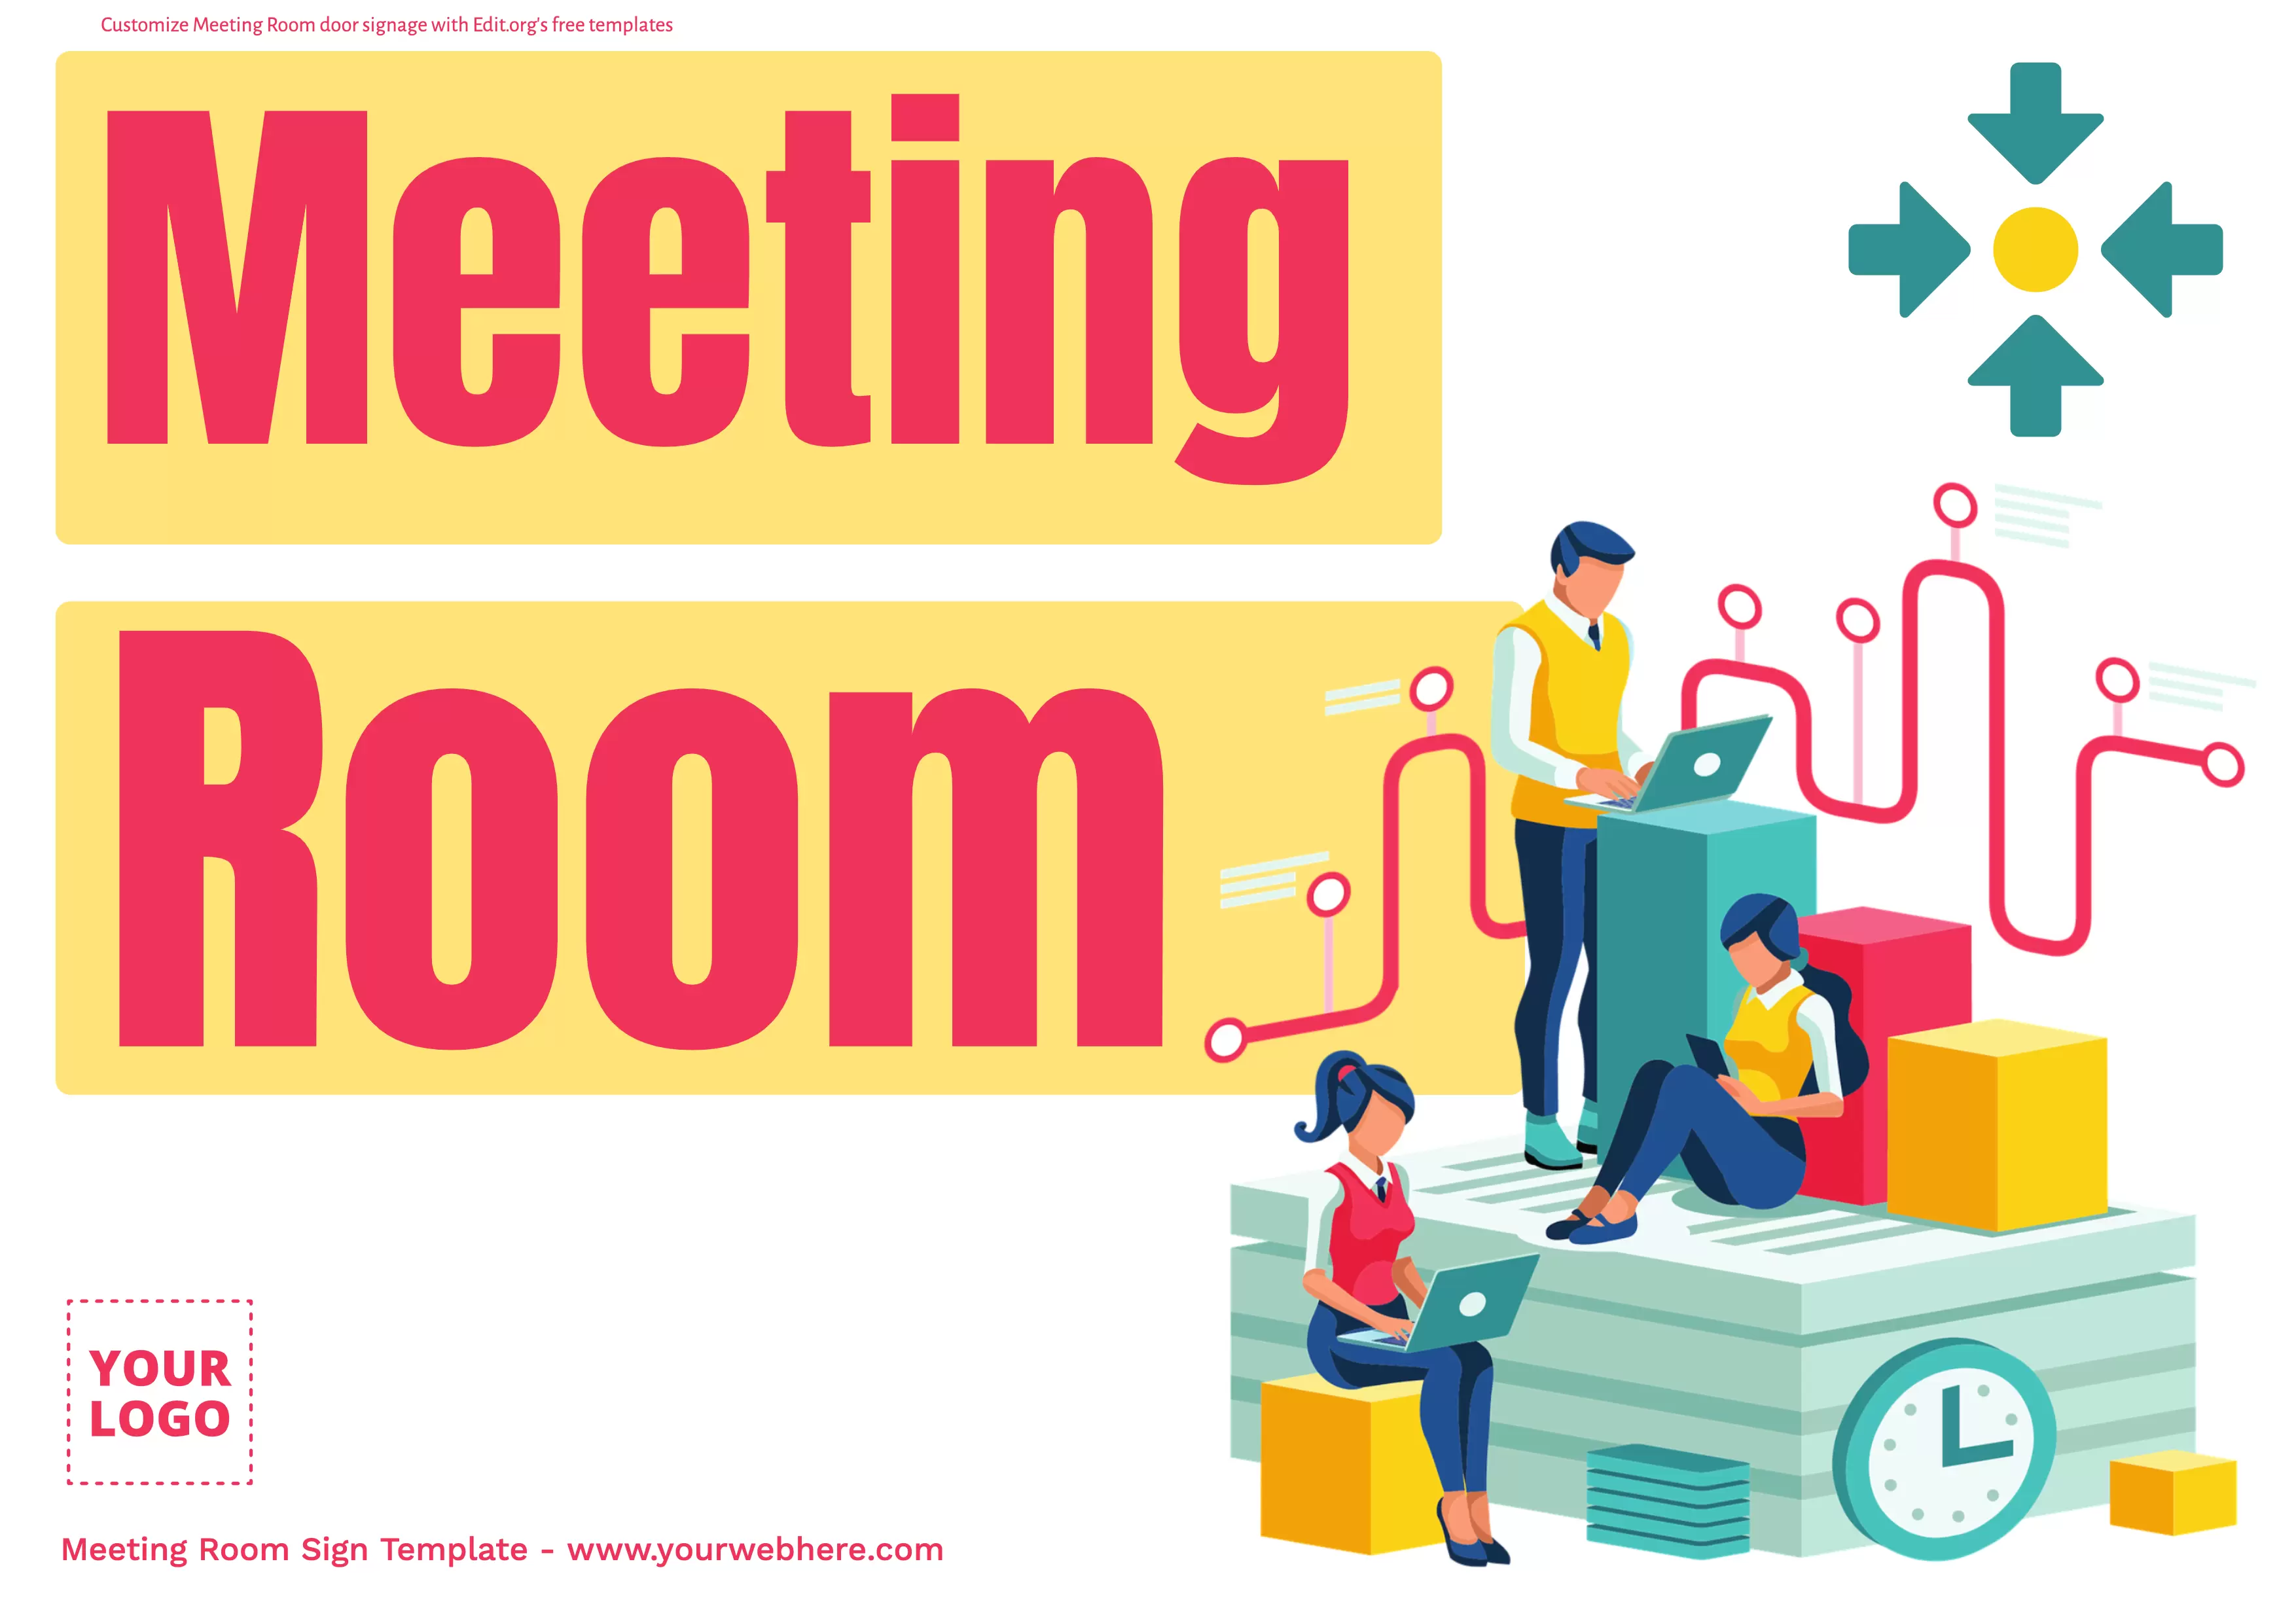 Meeting Room Digital Door signage template